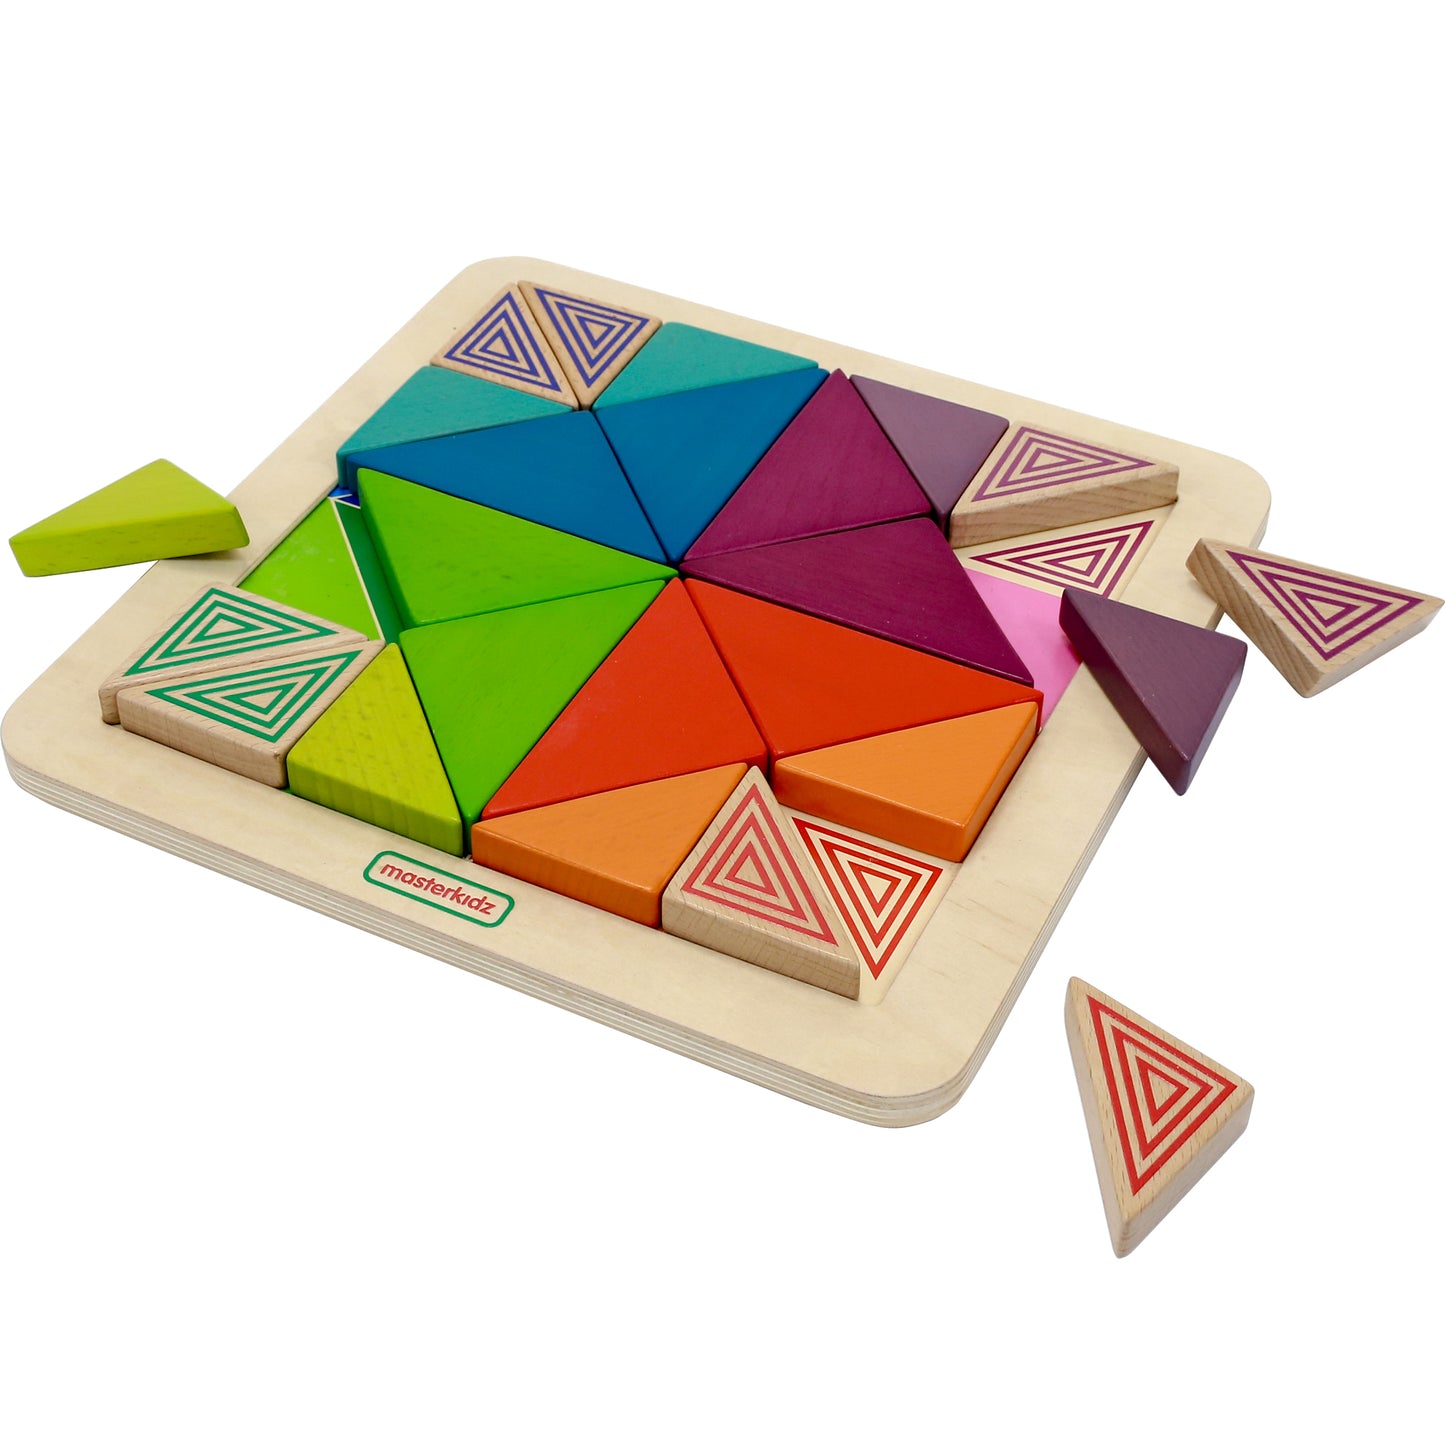 Masterkidz Triangle Mosaic Puzzle 三角形馬賽克拼塊遊戲